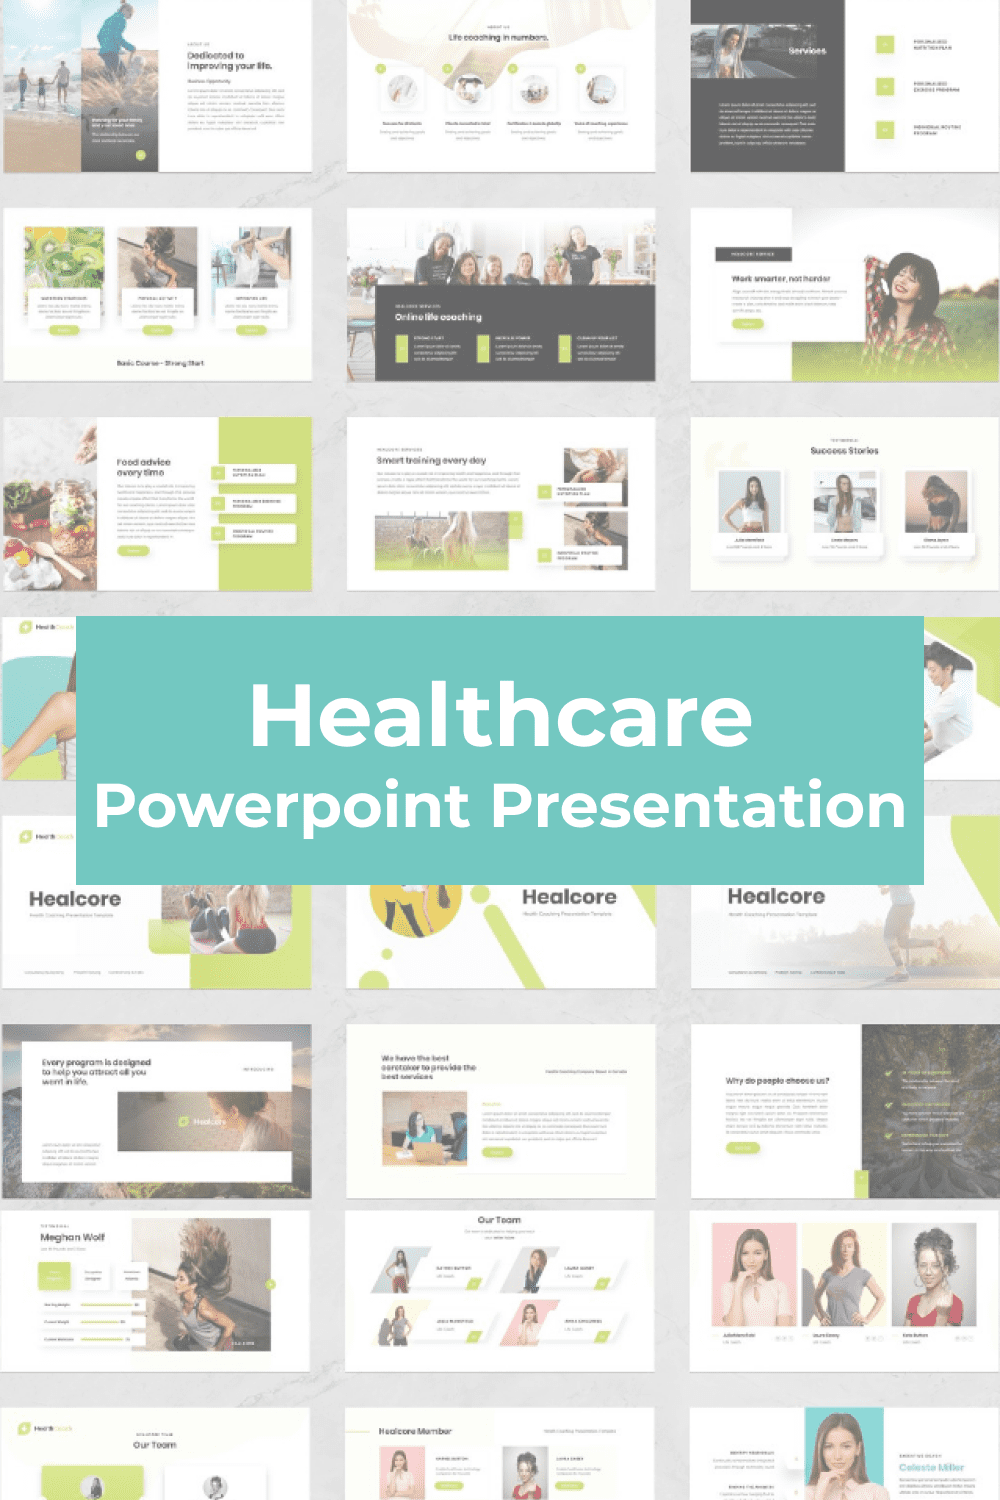 Healthcare Powerpoint Presentation Pinterest.